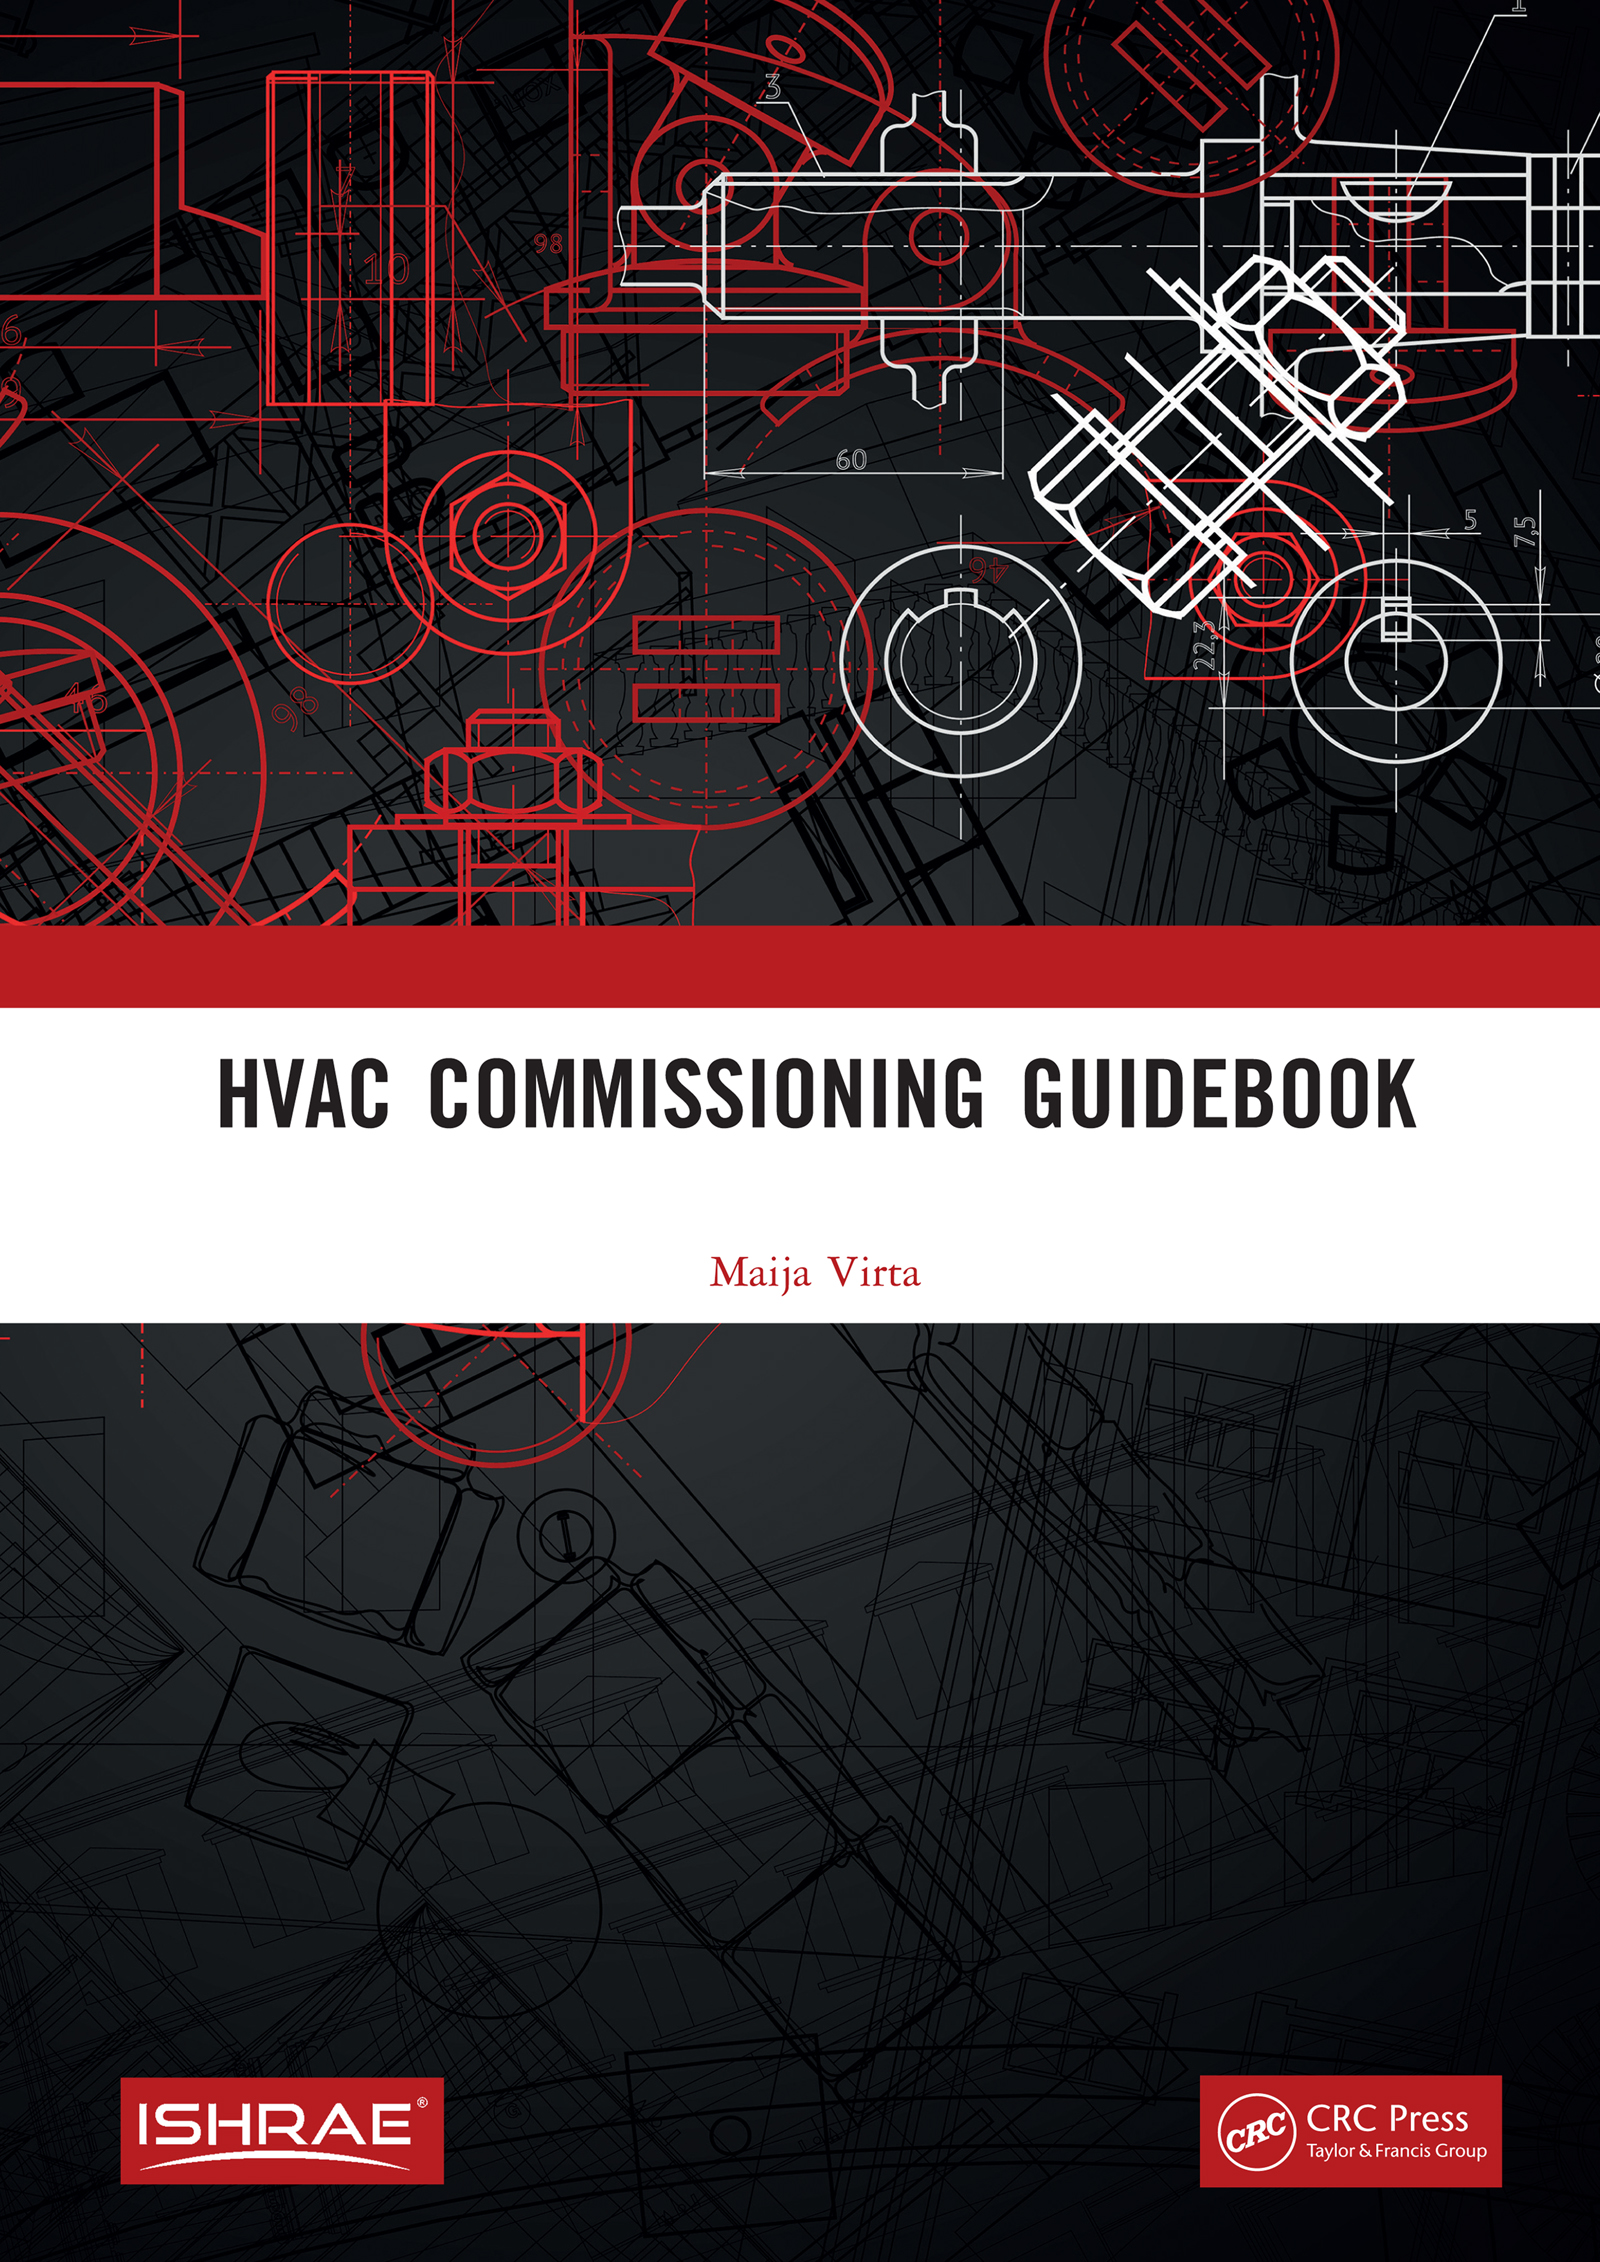 HVAC Commissioning Guidebook 2021